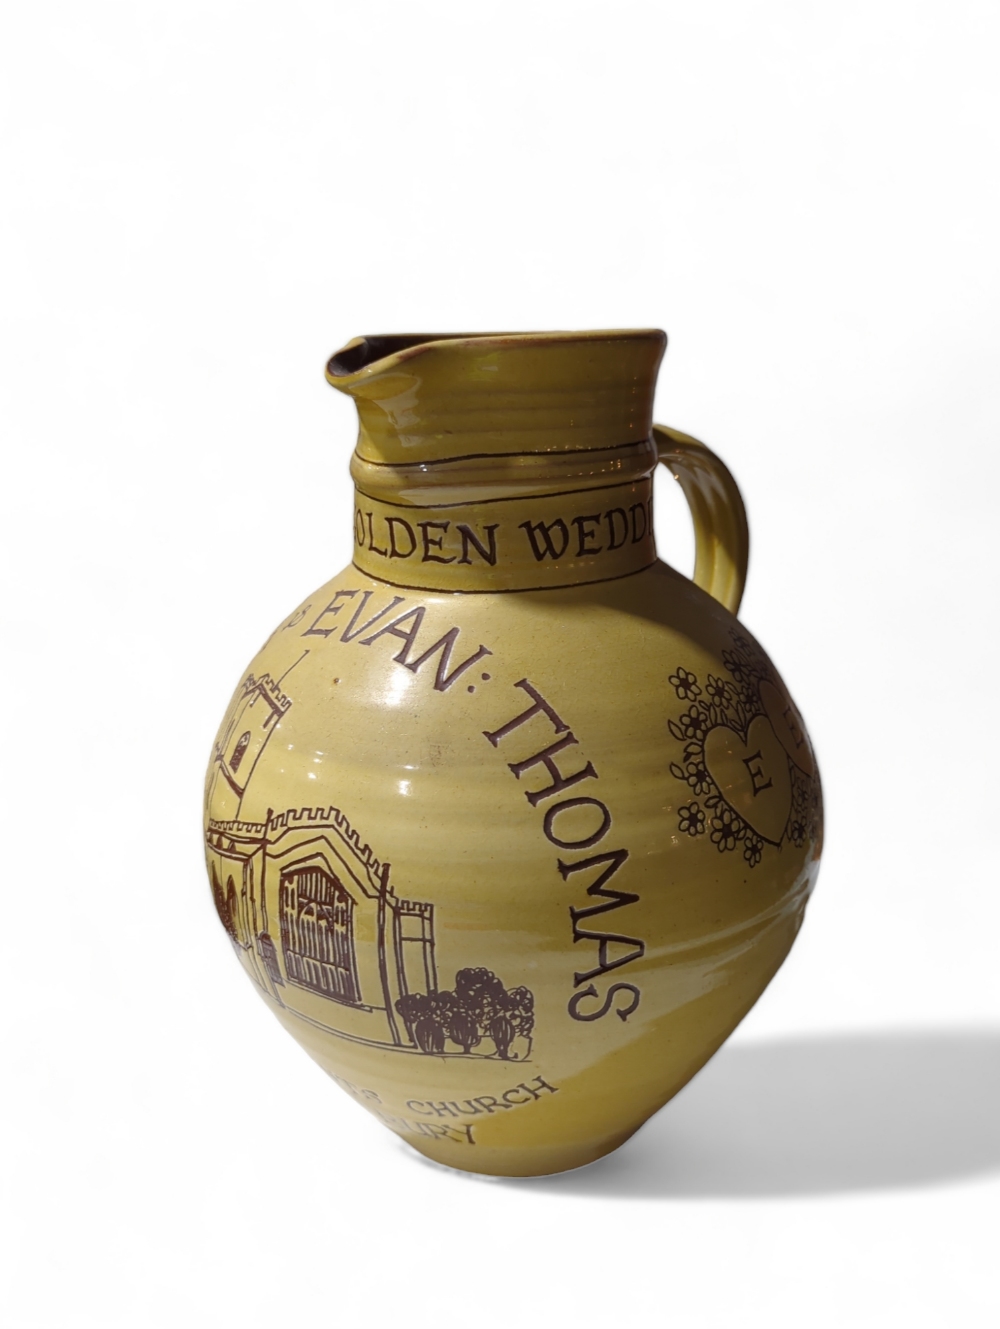 A Golden Wedding celebration jug, terracotta with